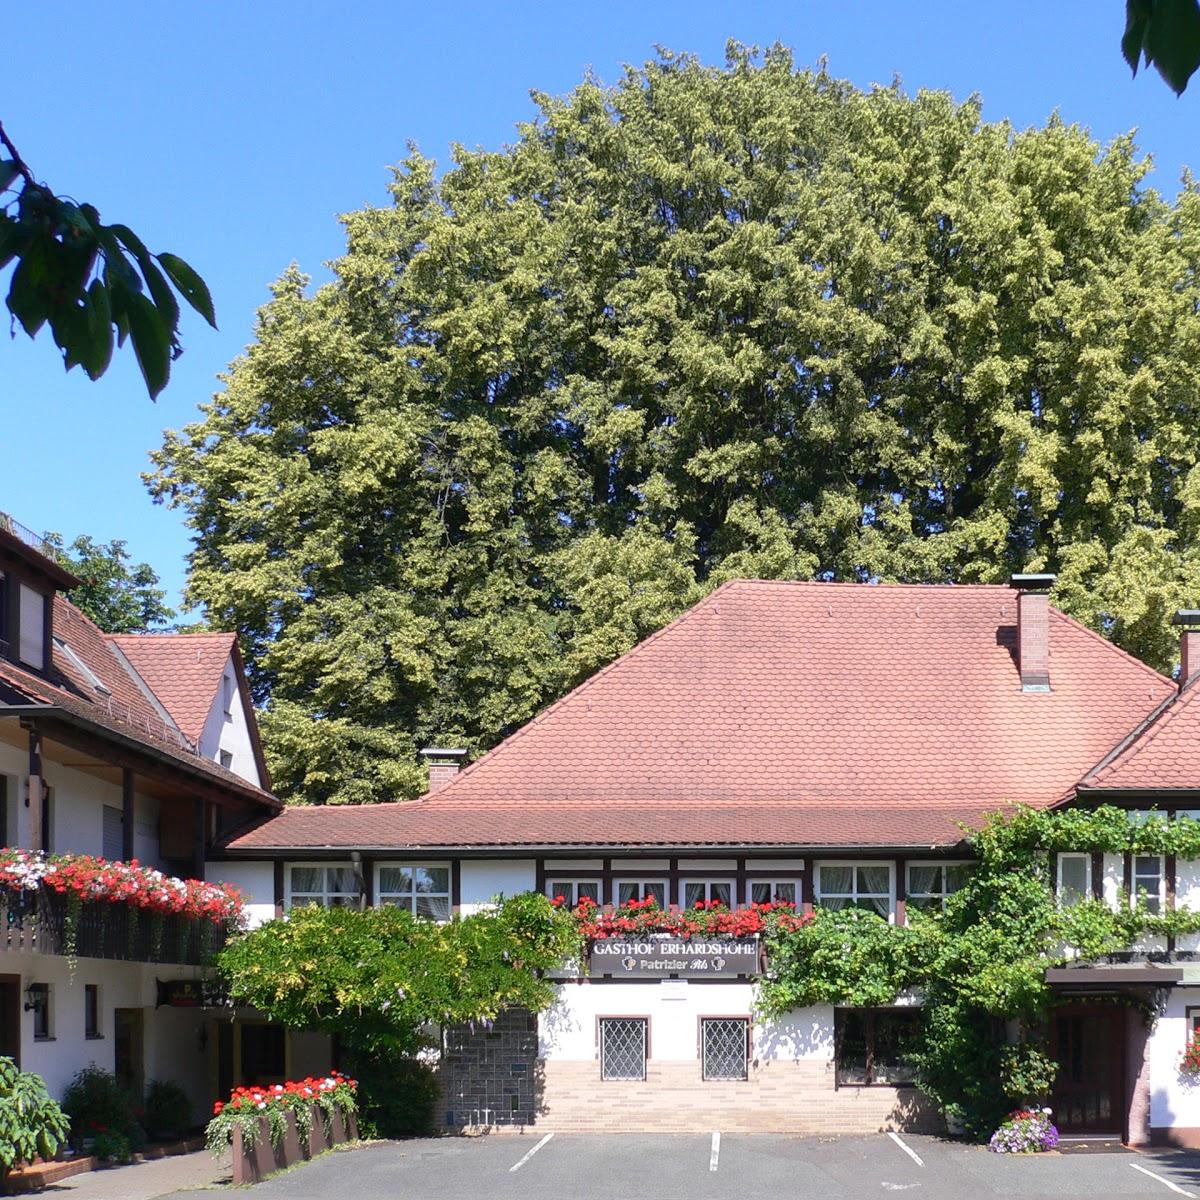 Restaurant "Erhardshöhe" in Heroldsberg